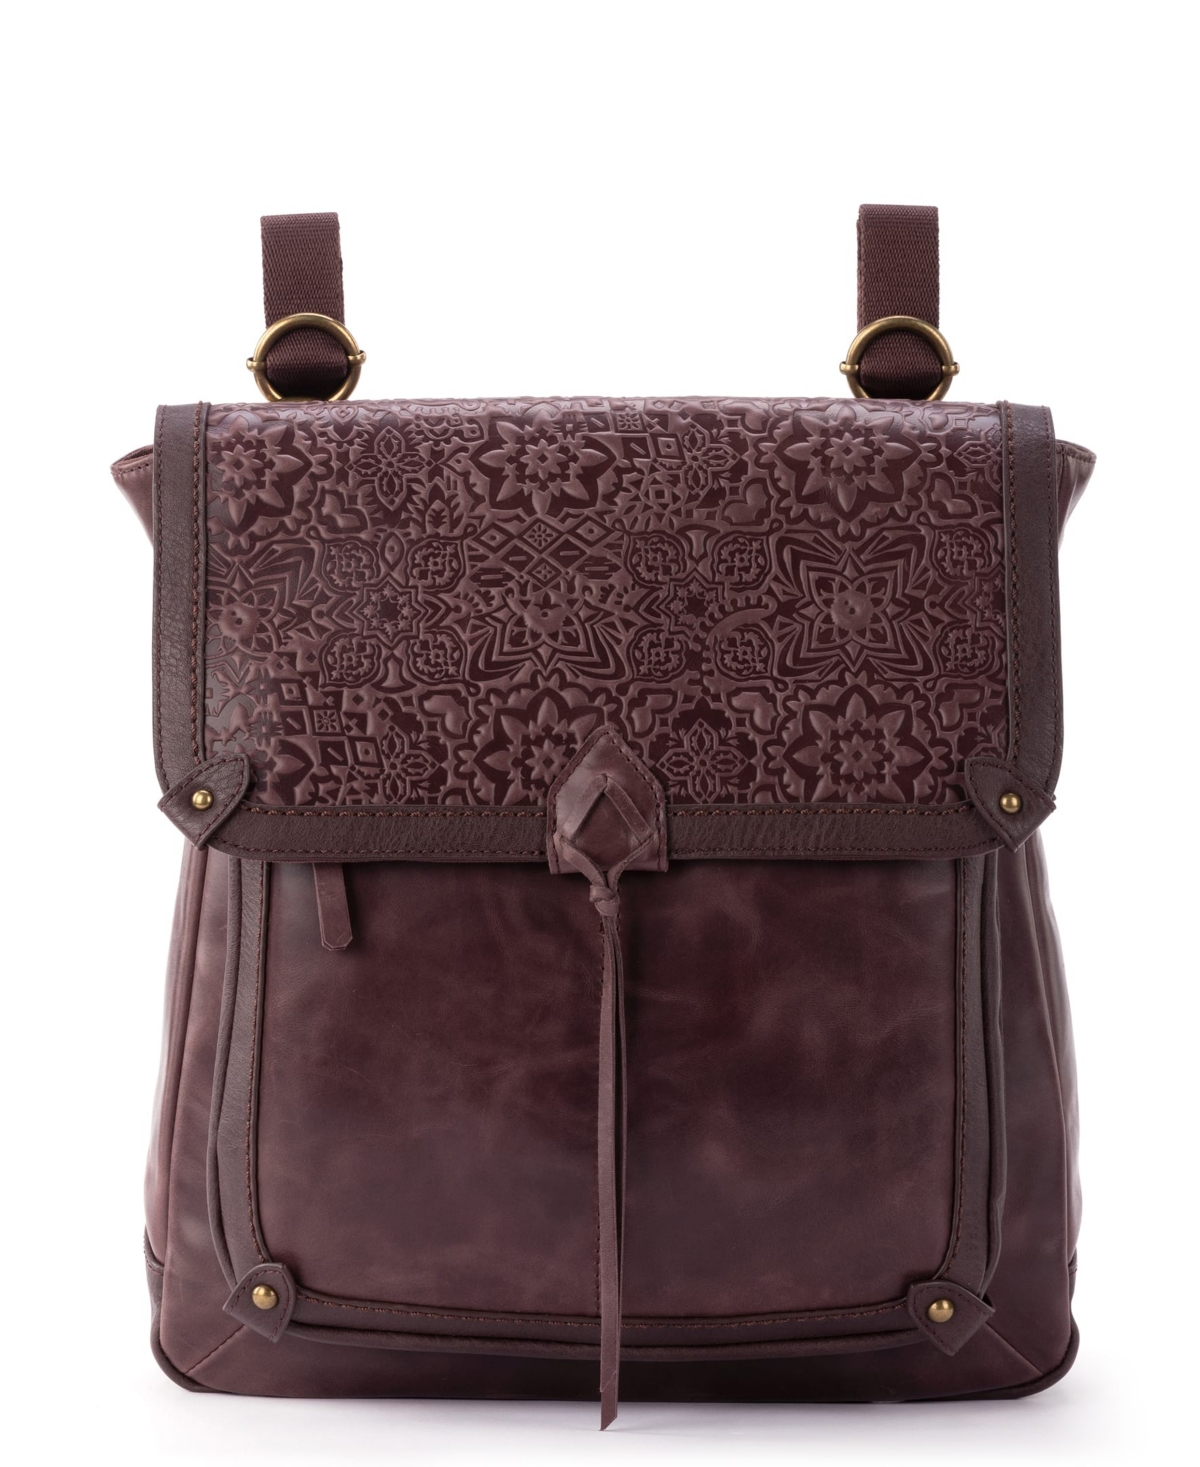 The Sak Women's Ventura Leather Convertible Backpack In Mahogany Tile Emboss